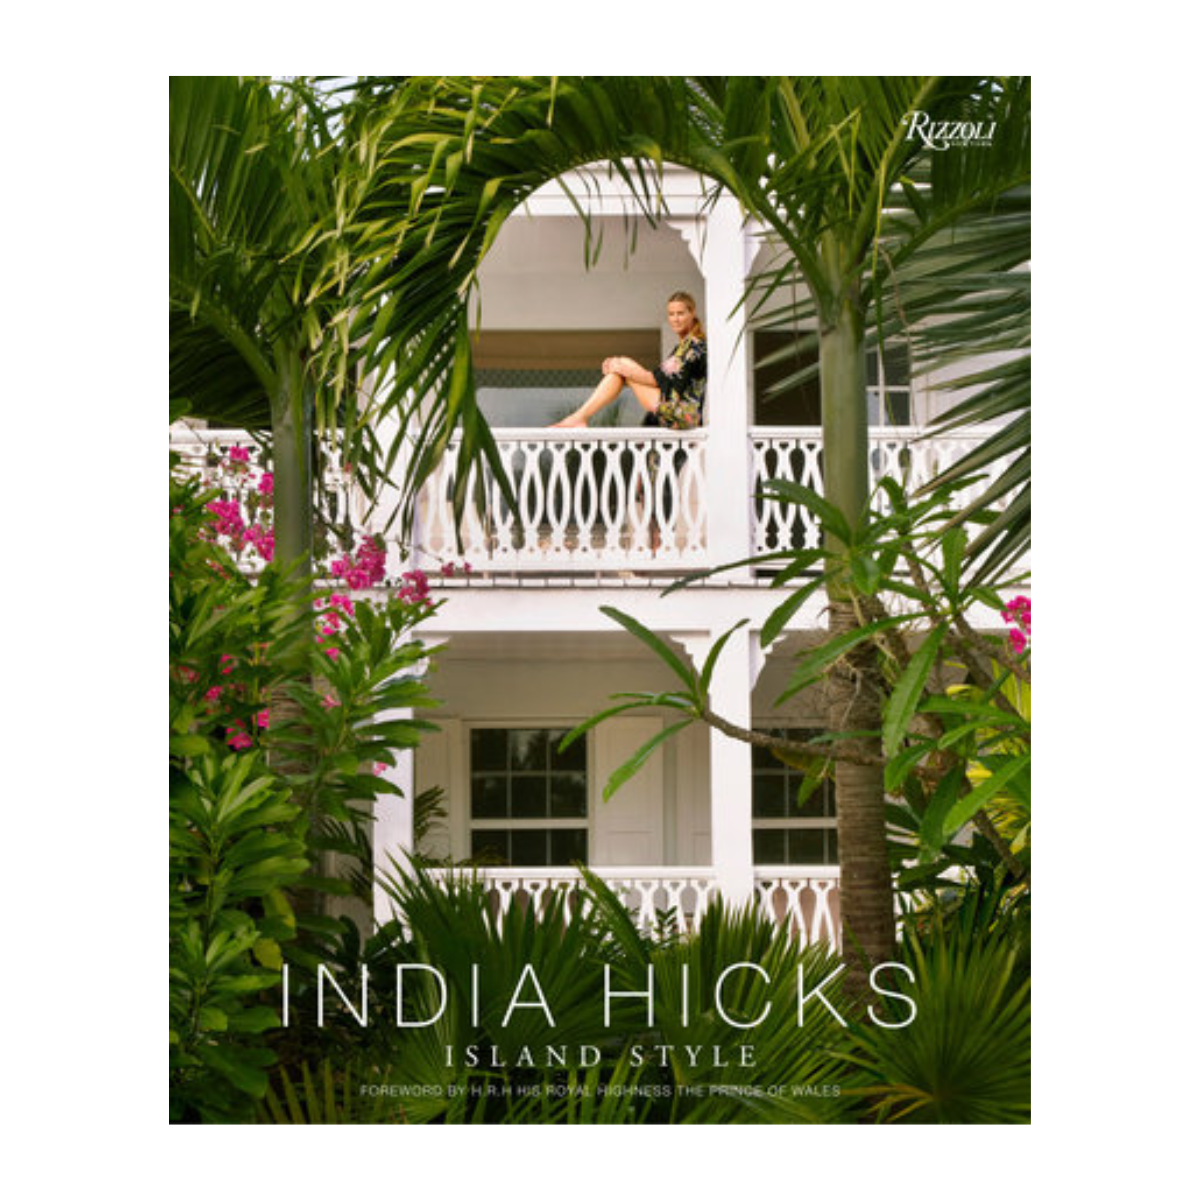 "India Hicks: Island Style”